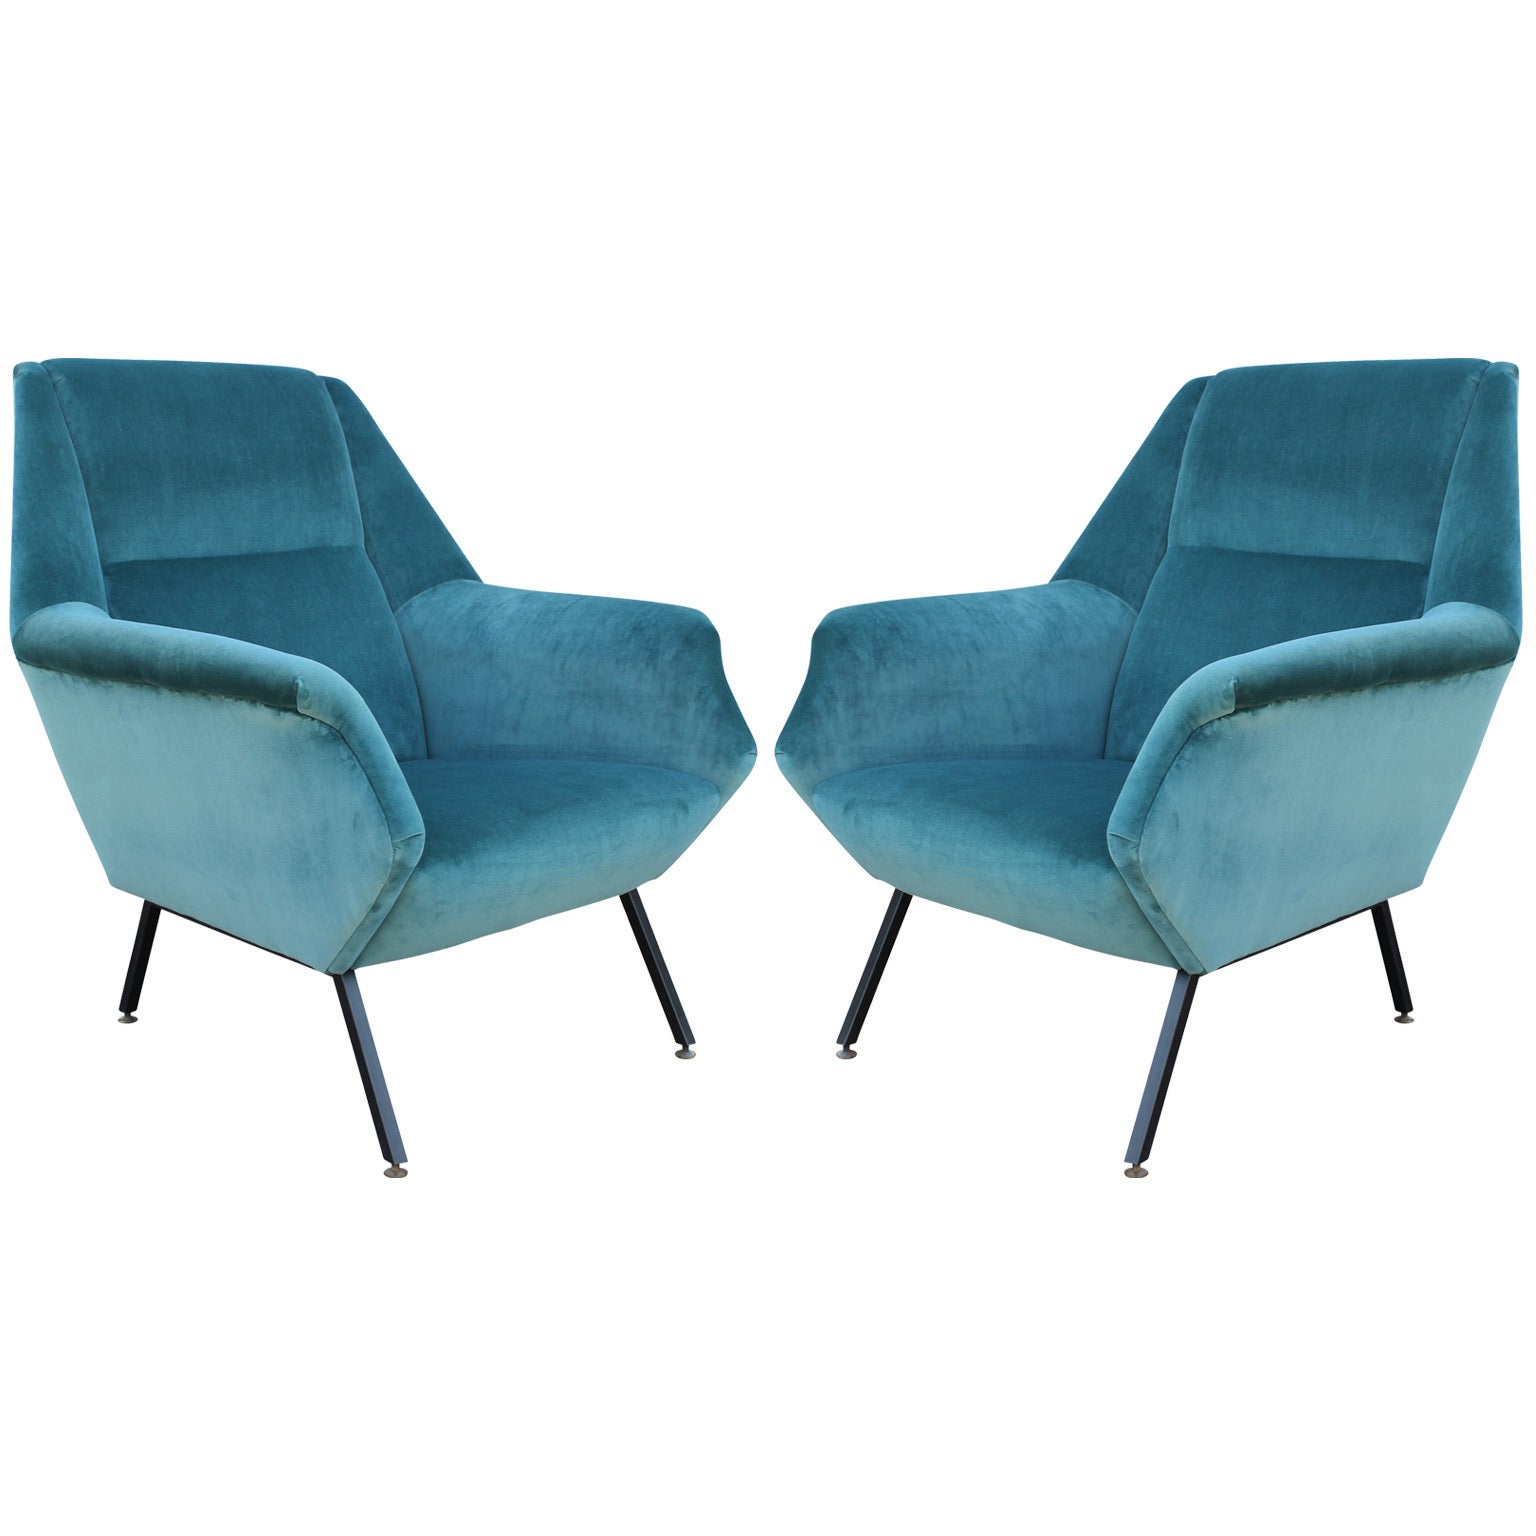 Pair of Fabulous Italian Lounge Chairs in Teal Velvet